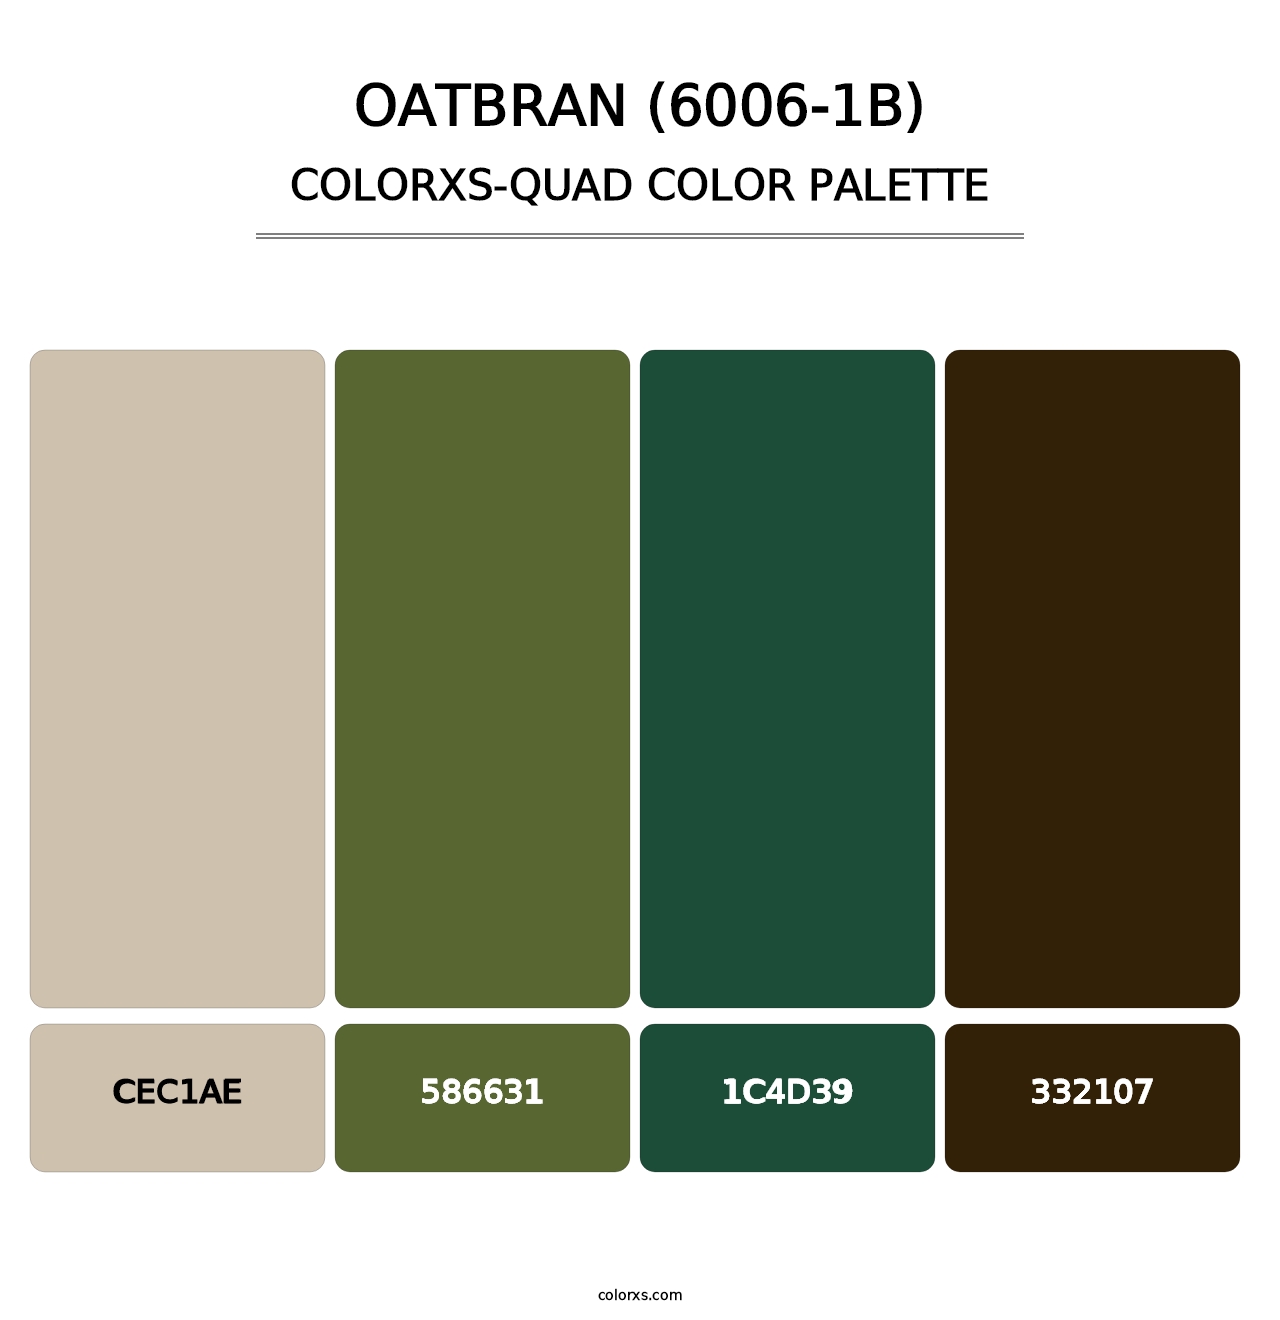 Oatbran (6006-1B) - Colorxs Quad Palette